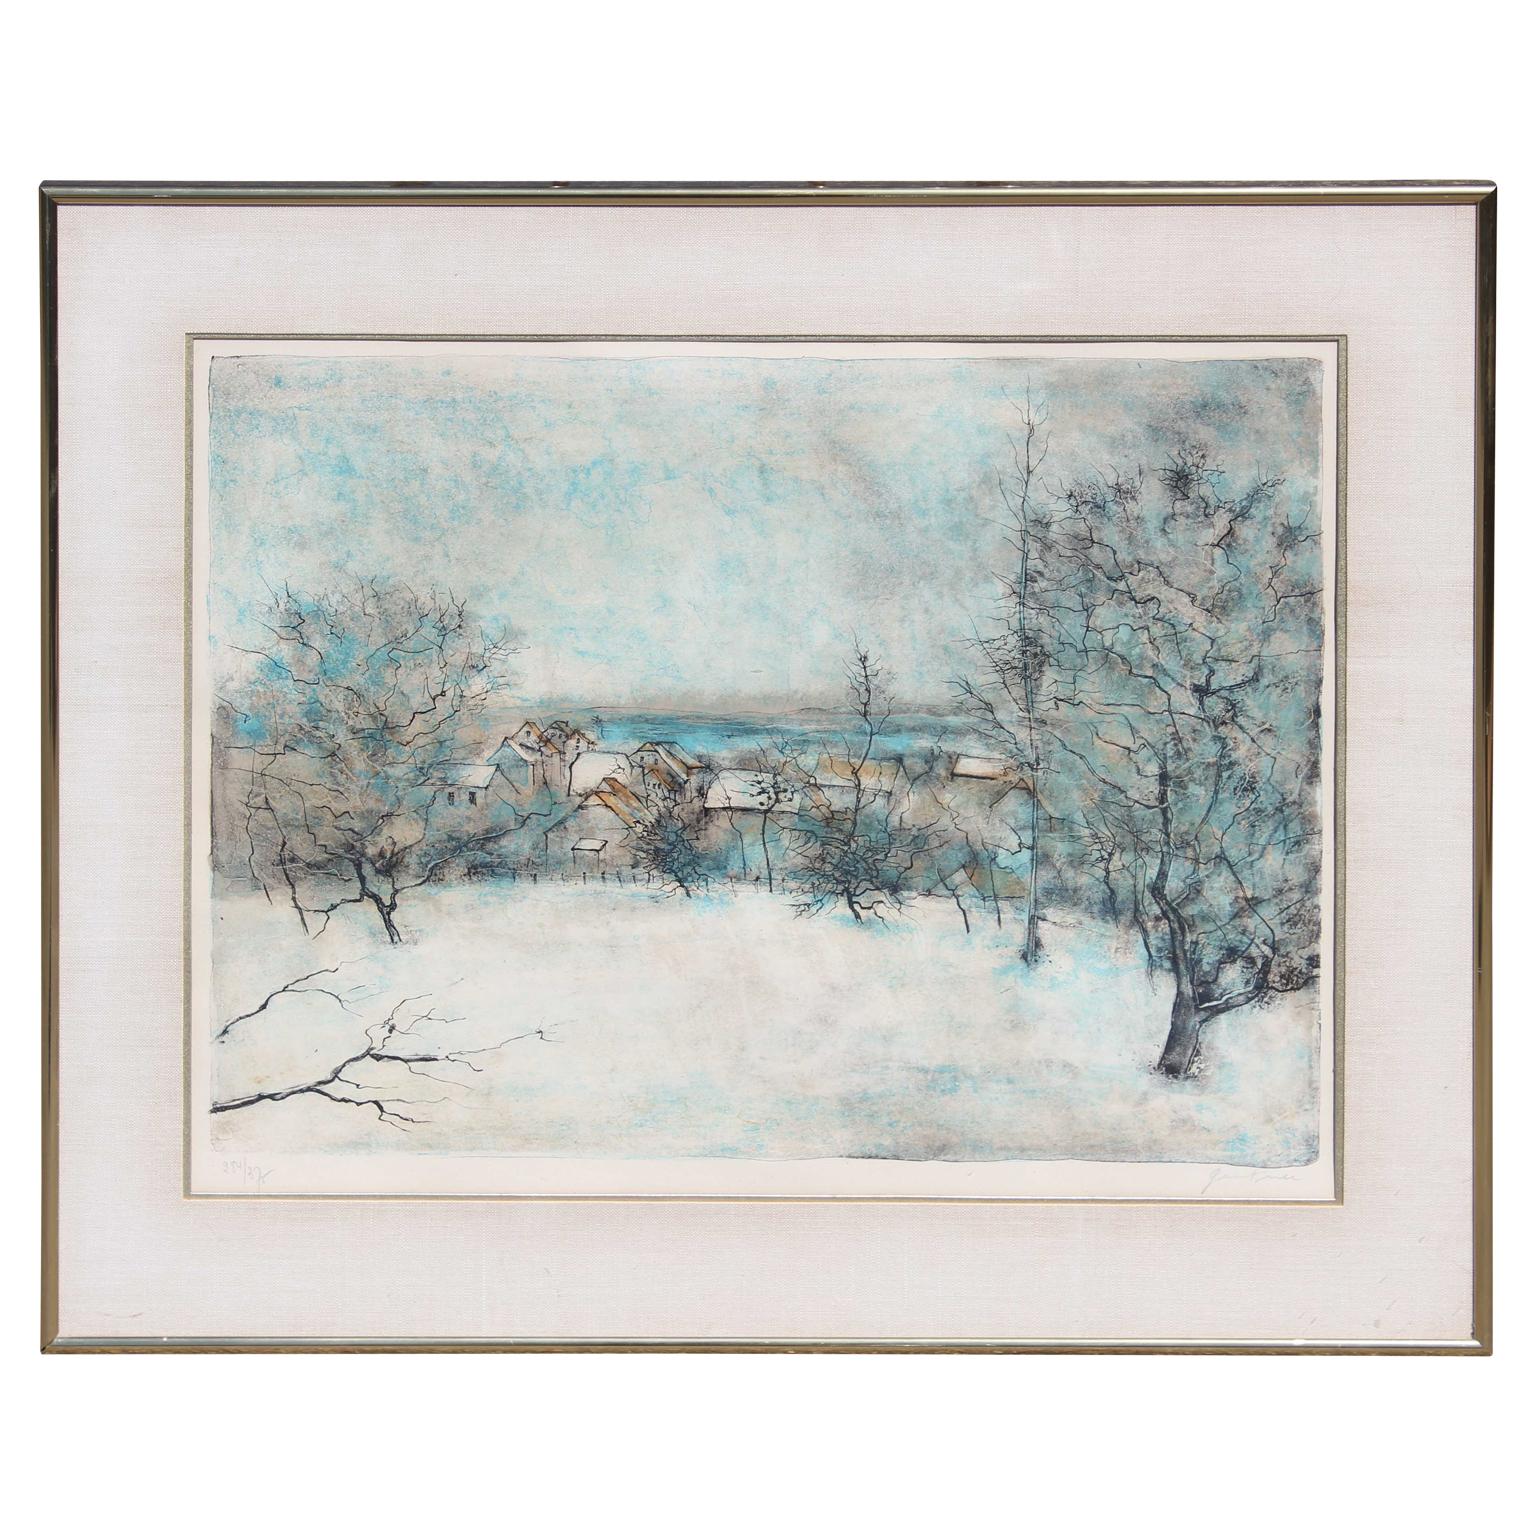 Bernard Gantner Landscape Painting - Winter Landscape with Town, Edition 284 of 375